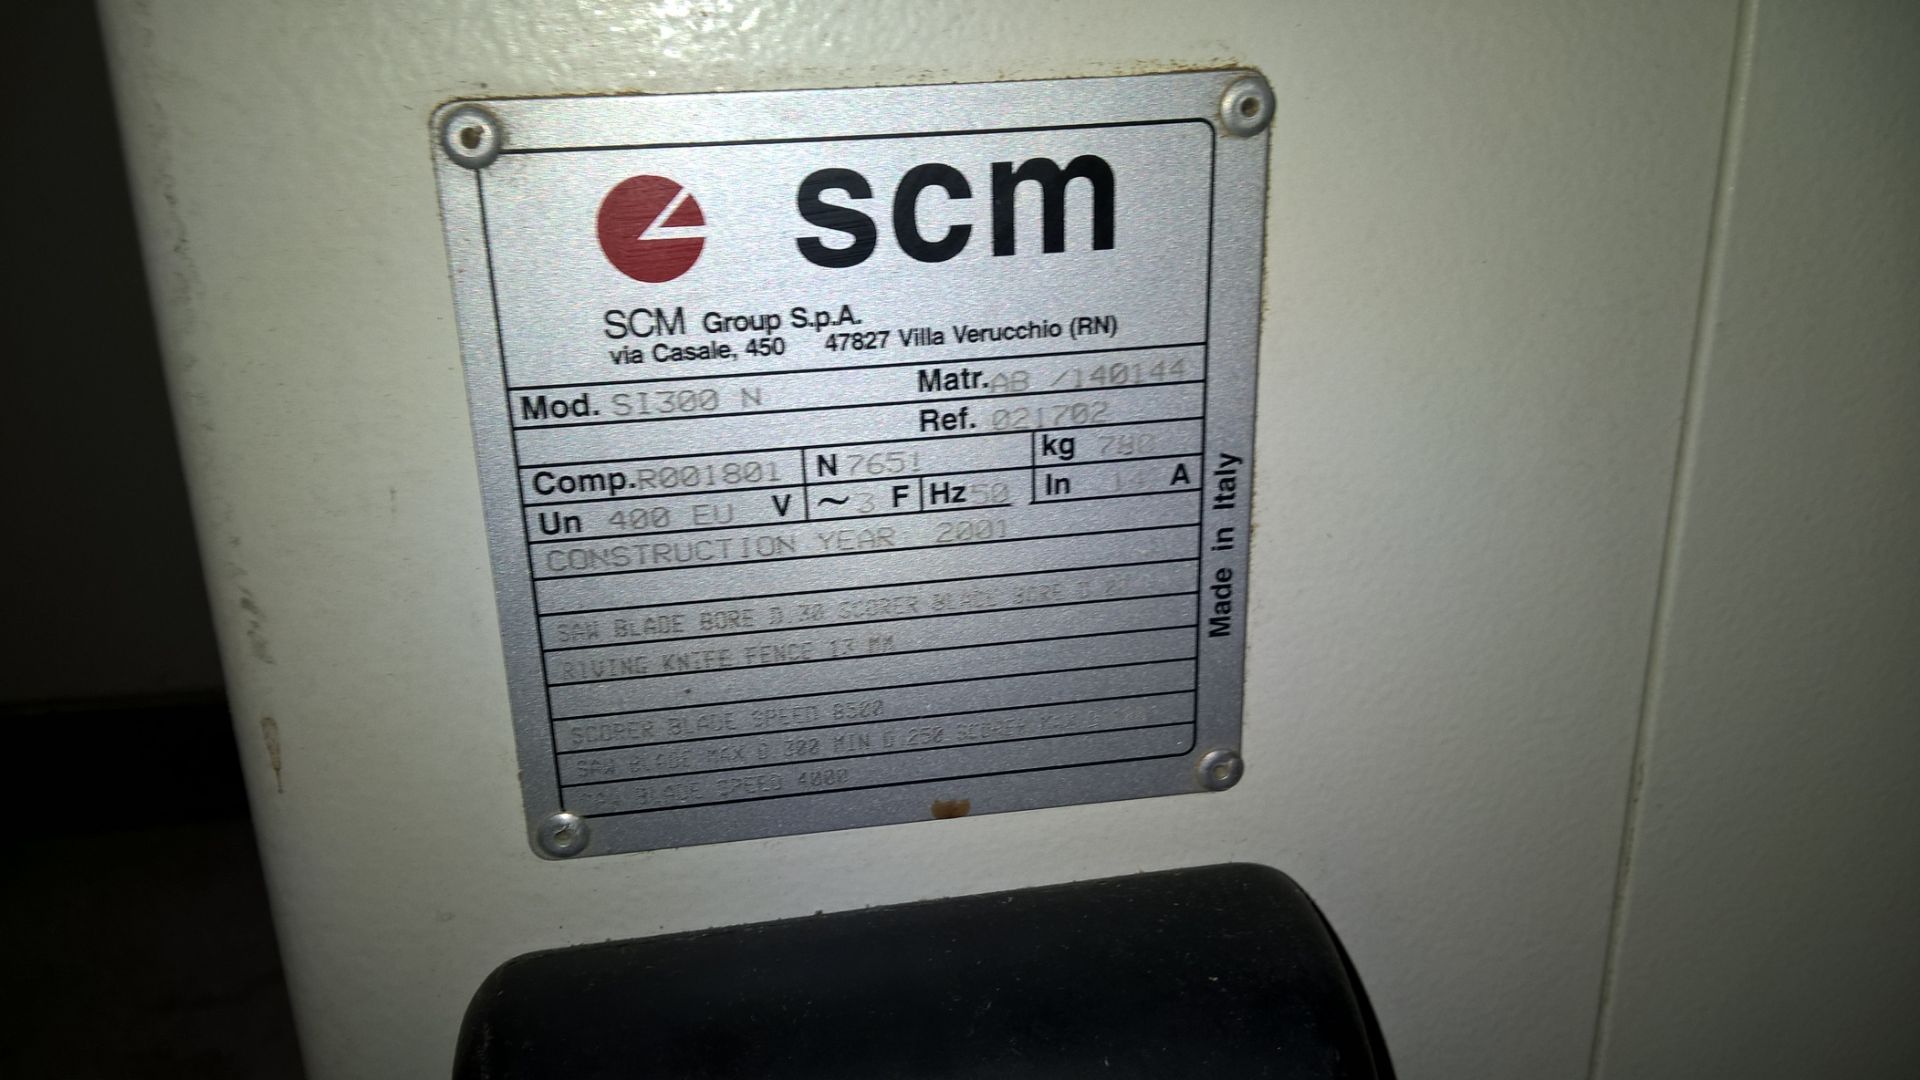 SCM Panel saw Si300n Serial no. AB / 140144 Year 2001 - Image 4 of 6